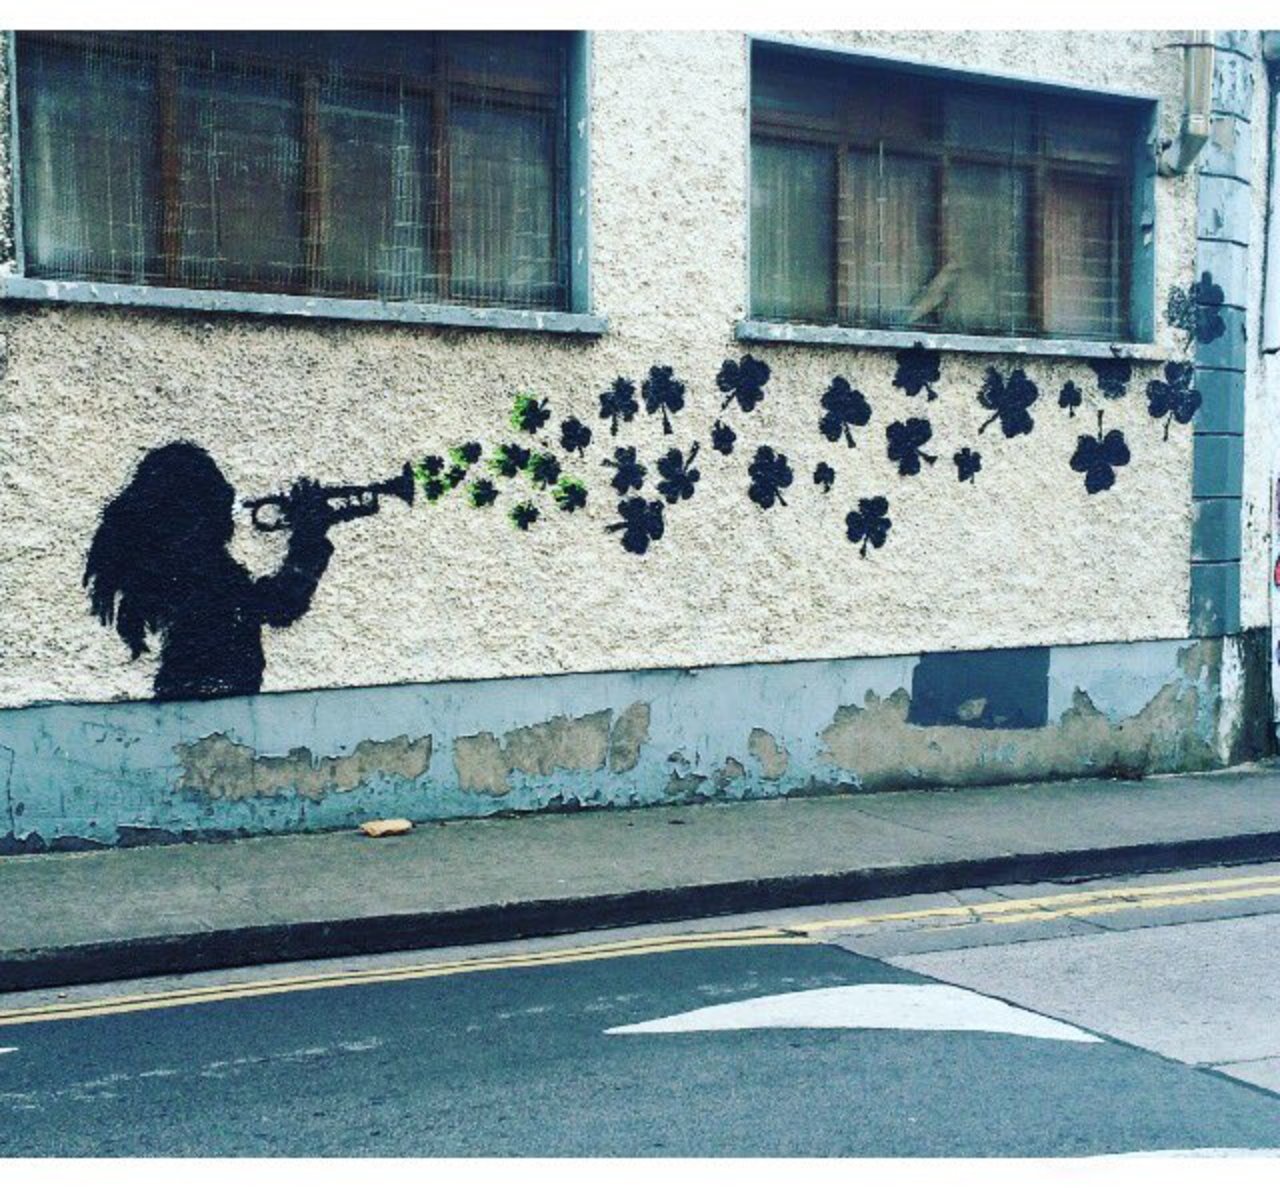 Passing cool graffiti on the way to work ❤️ #OneIrishDay #graffiti #art #shamrocks #music #Dublin #LoveDublin https://t.co/j1ibumOuqs